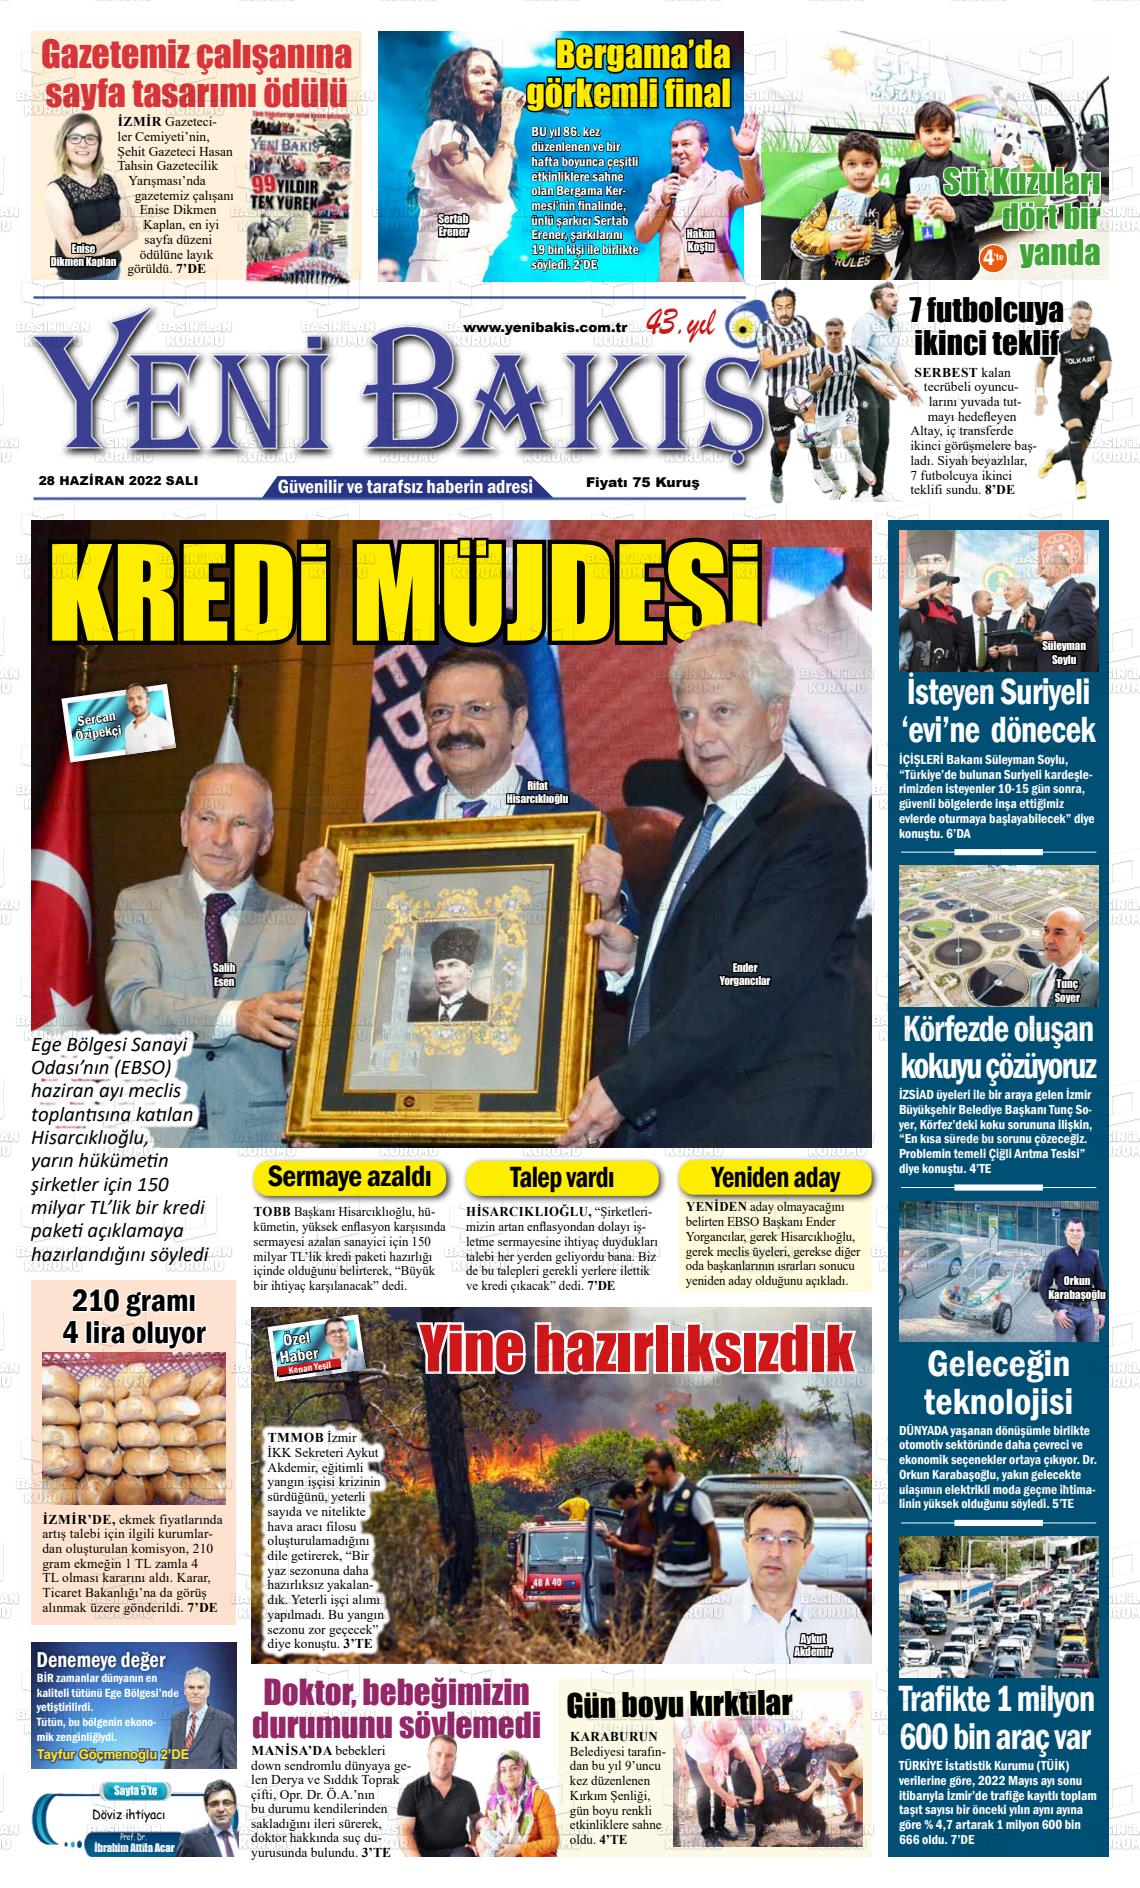 28 Haziran 2022 Yeni Bakış Gazete Manşeti